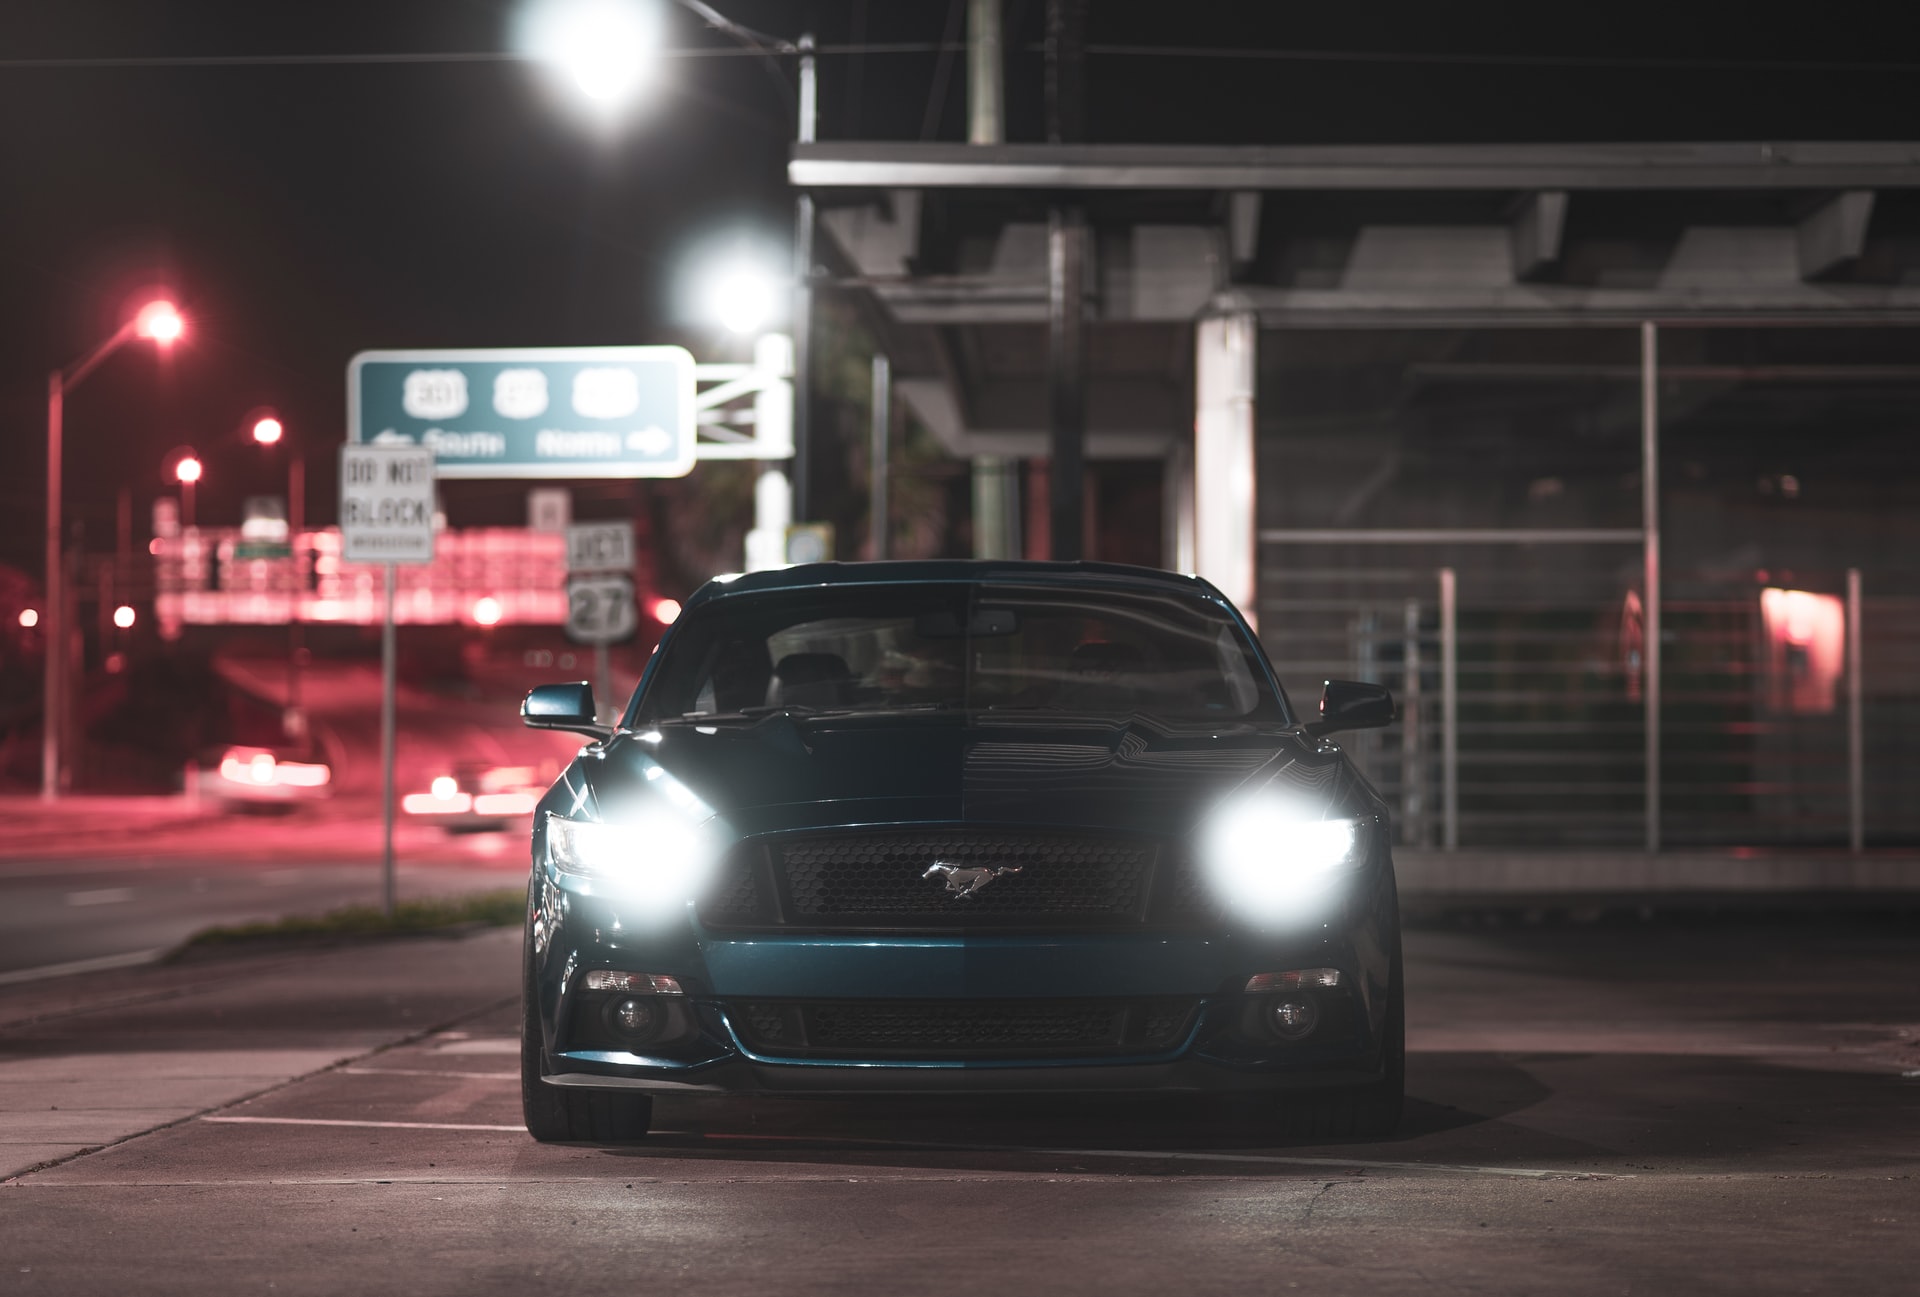 Blue Mustang at Nighttime